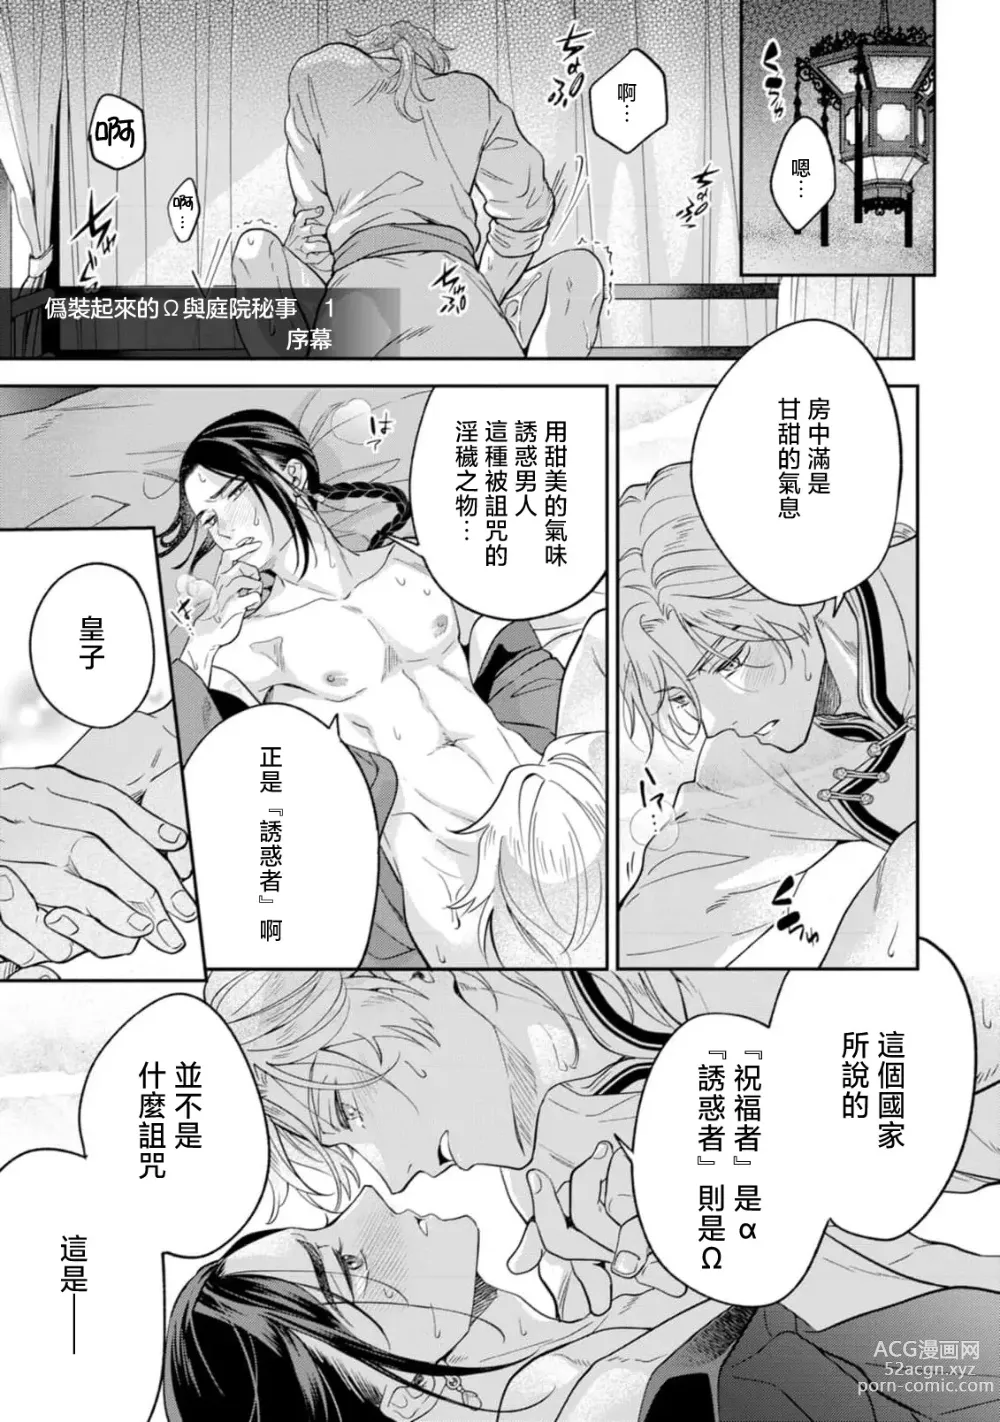 Page 3 of manga 伪装起来的Ω与庭院秘事 1